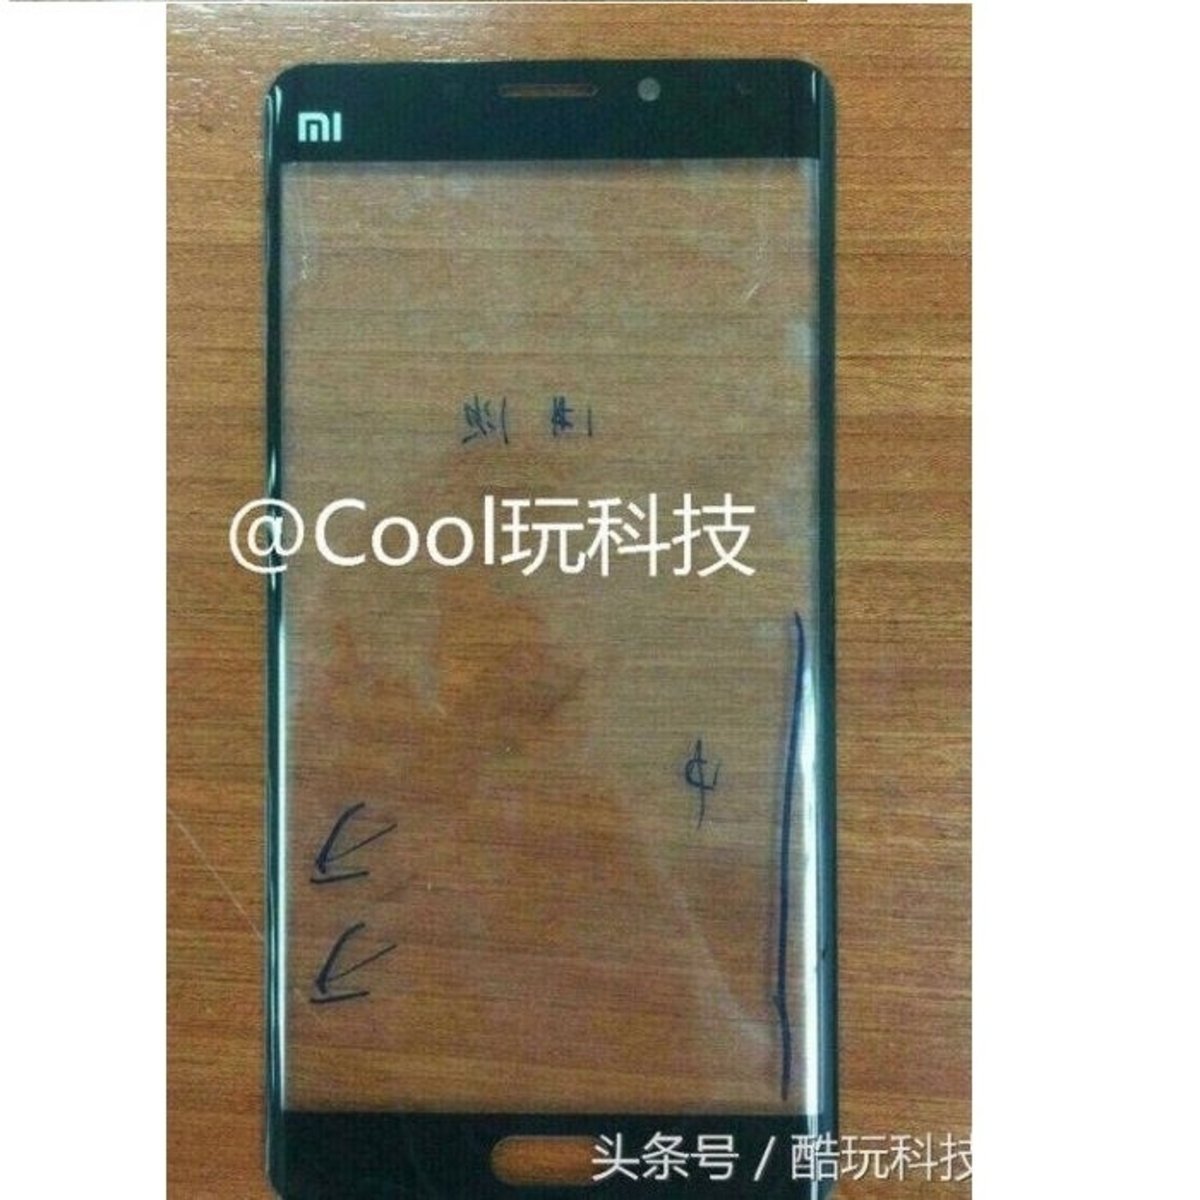 Xiaomi Mi Note 2 frontal